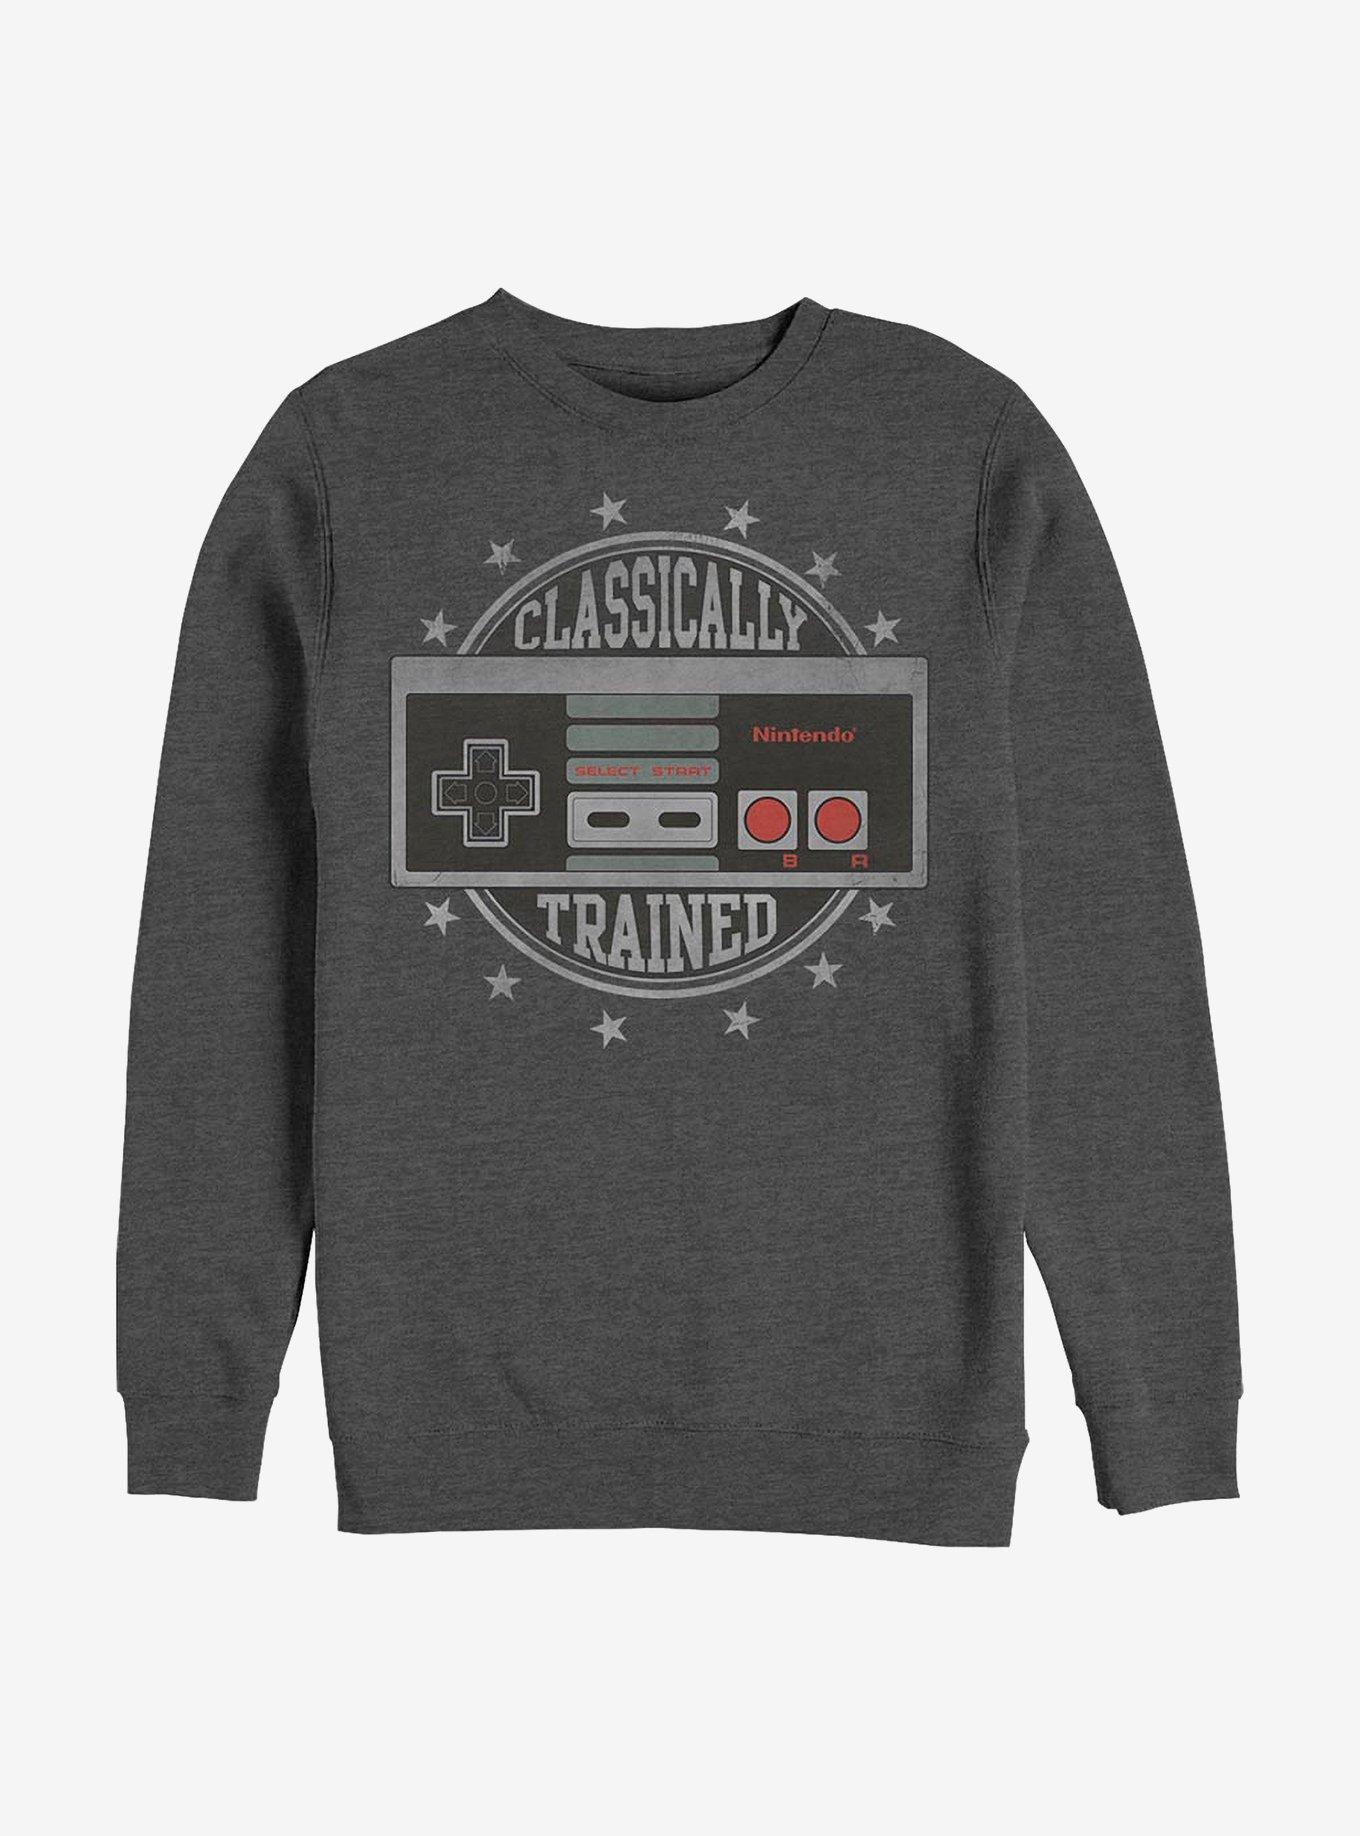 Nintendo Classically Trained Crew Sweatshirt